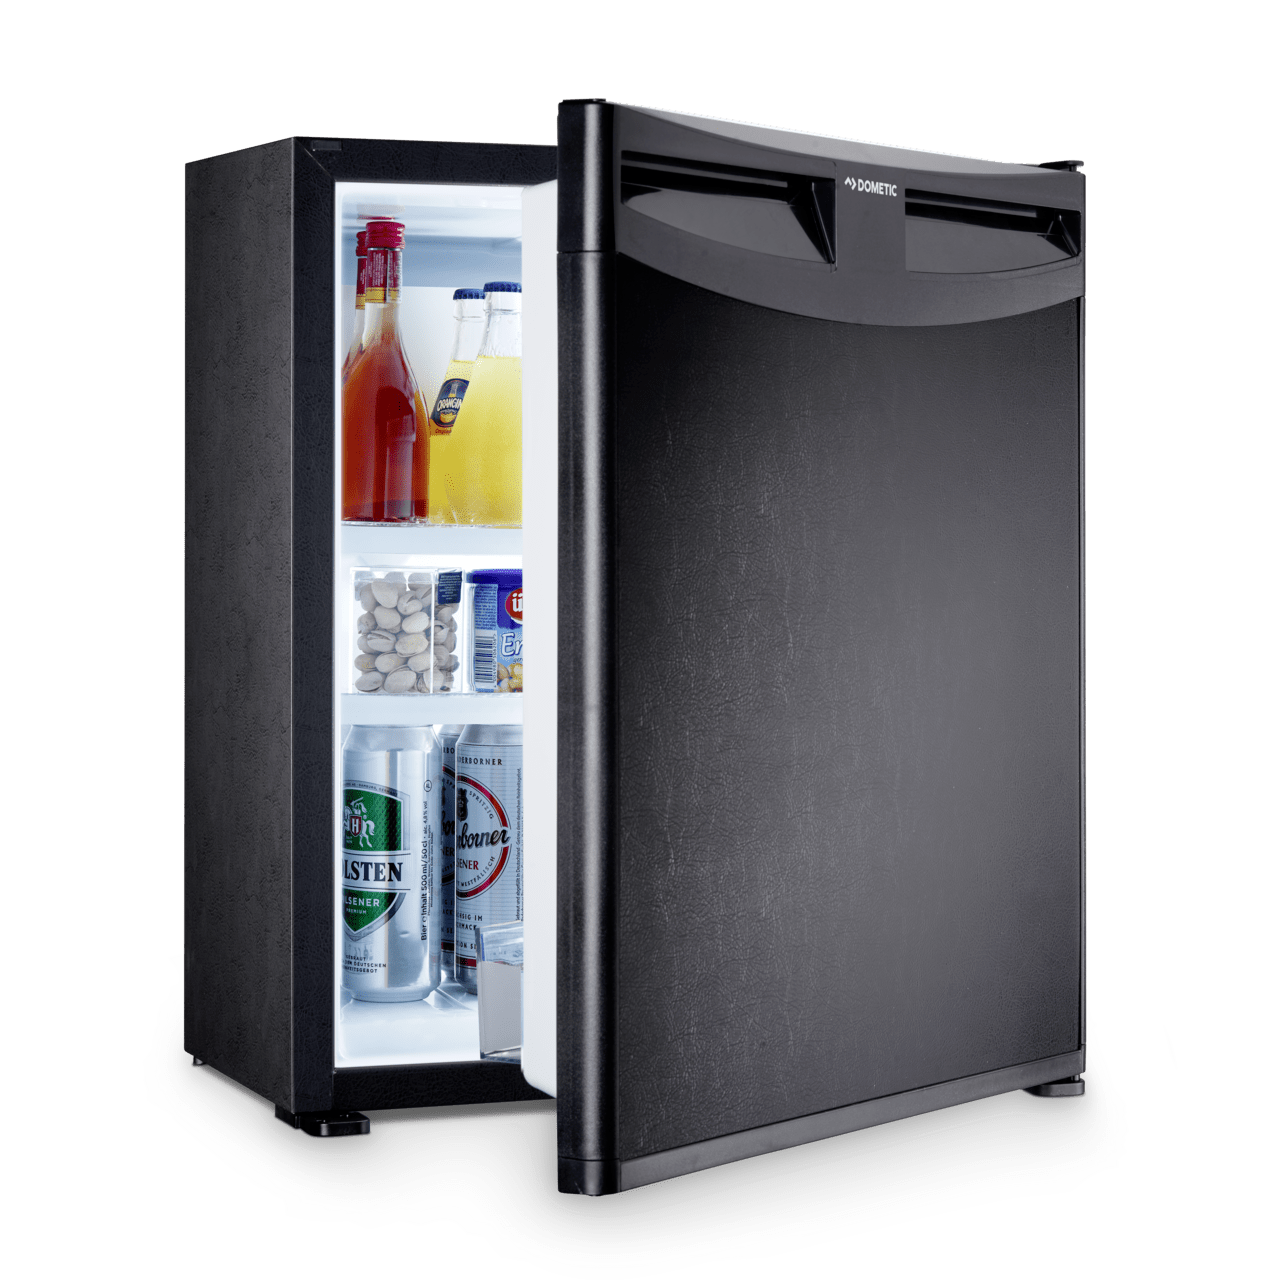 Dometic RH460LD Minibar, 60 L, with Solid Door 1-Year Warranty